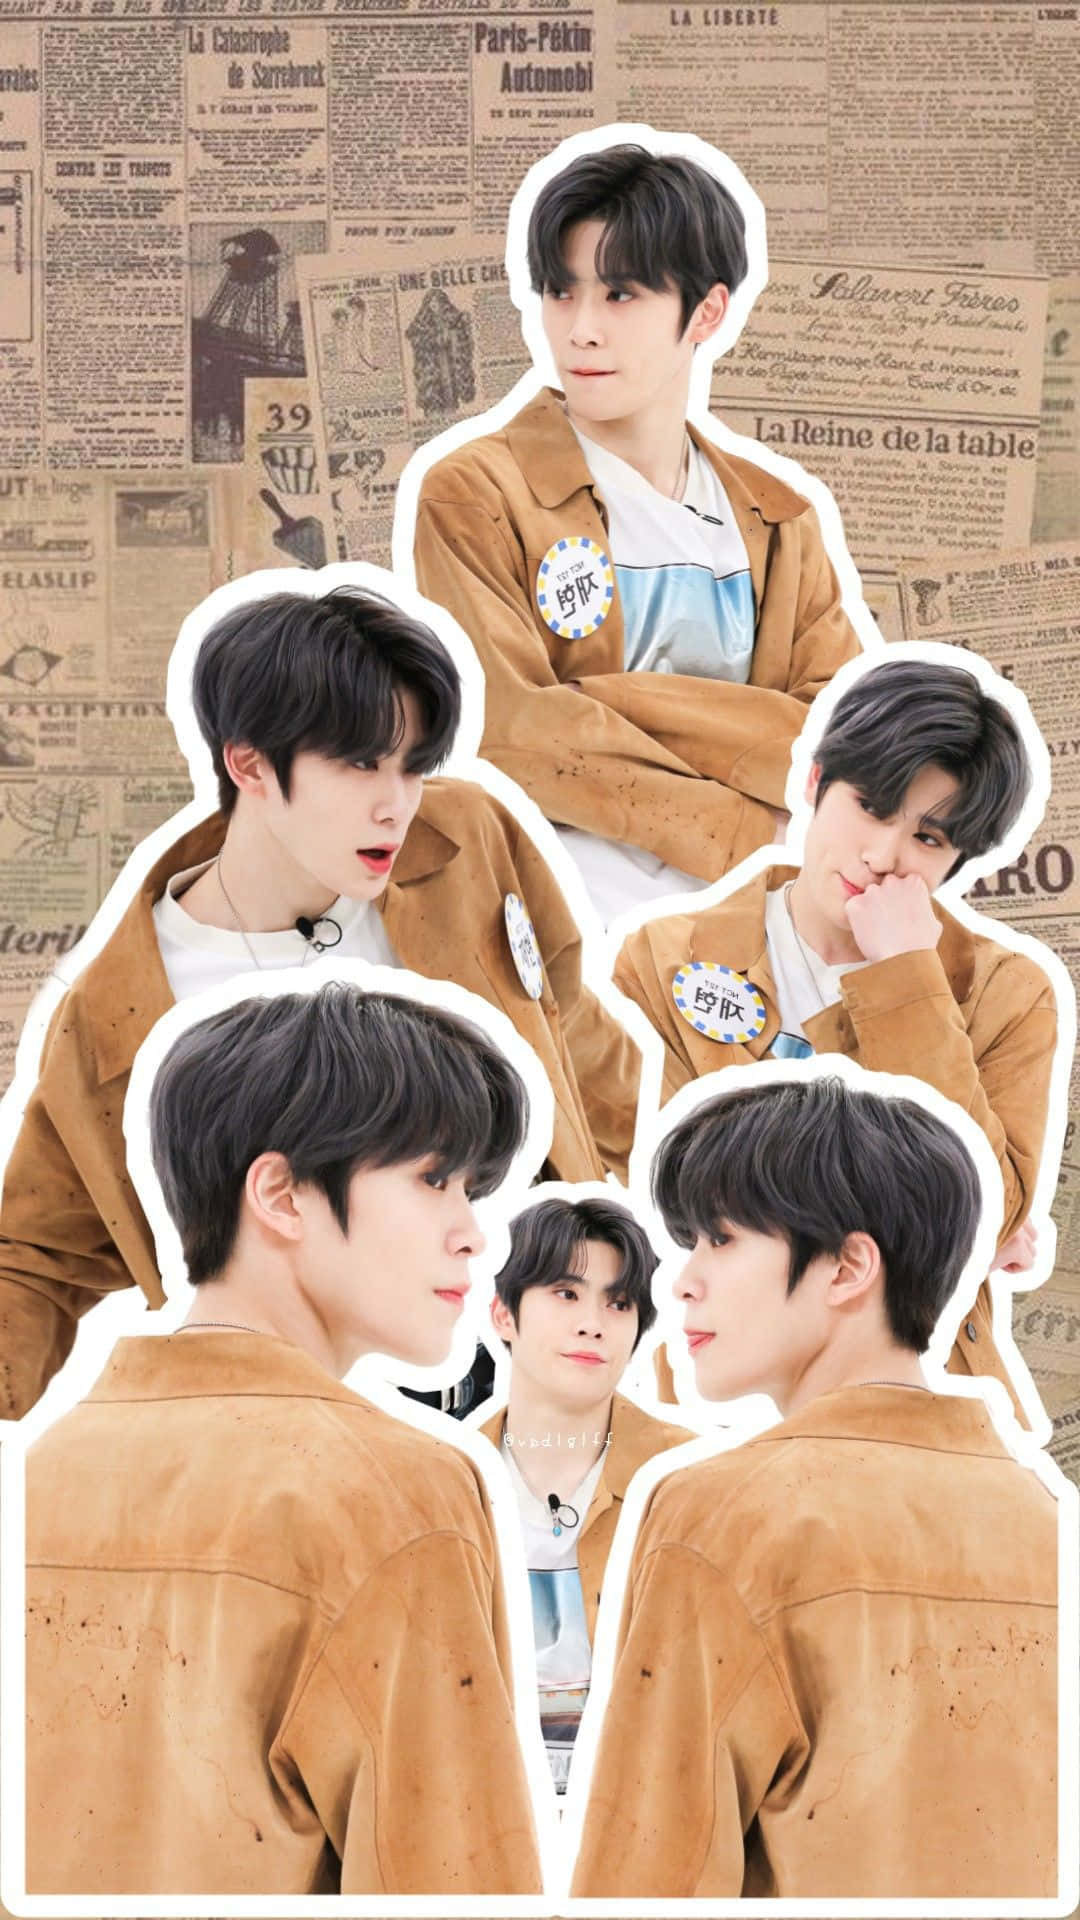 NCT Jaehyun Newspaper Background Collage Wallpaper